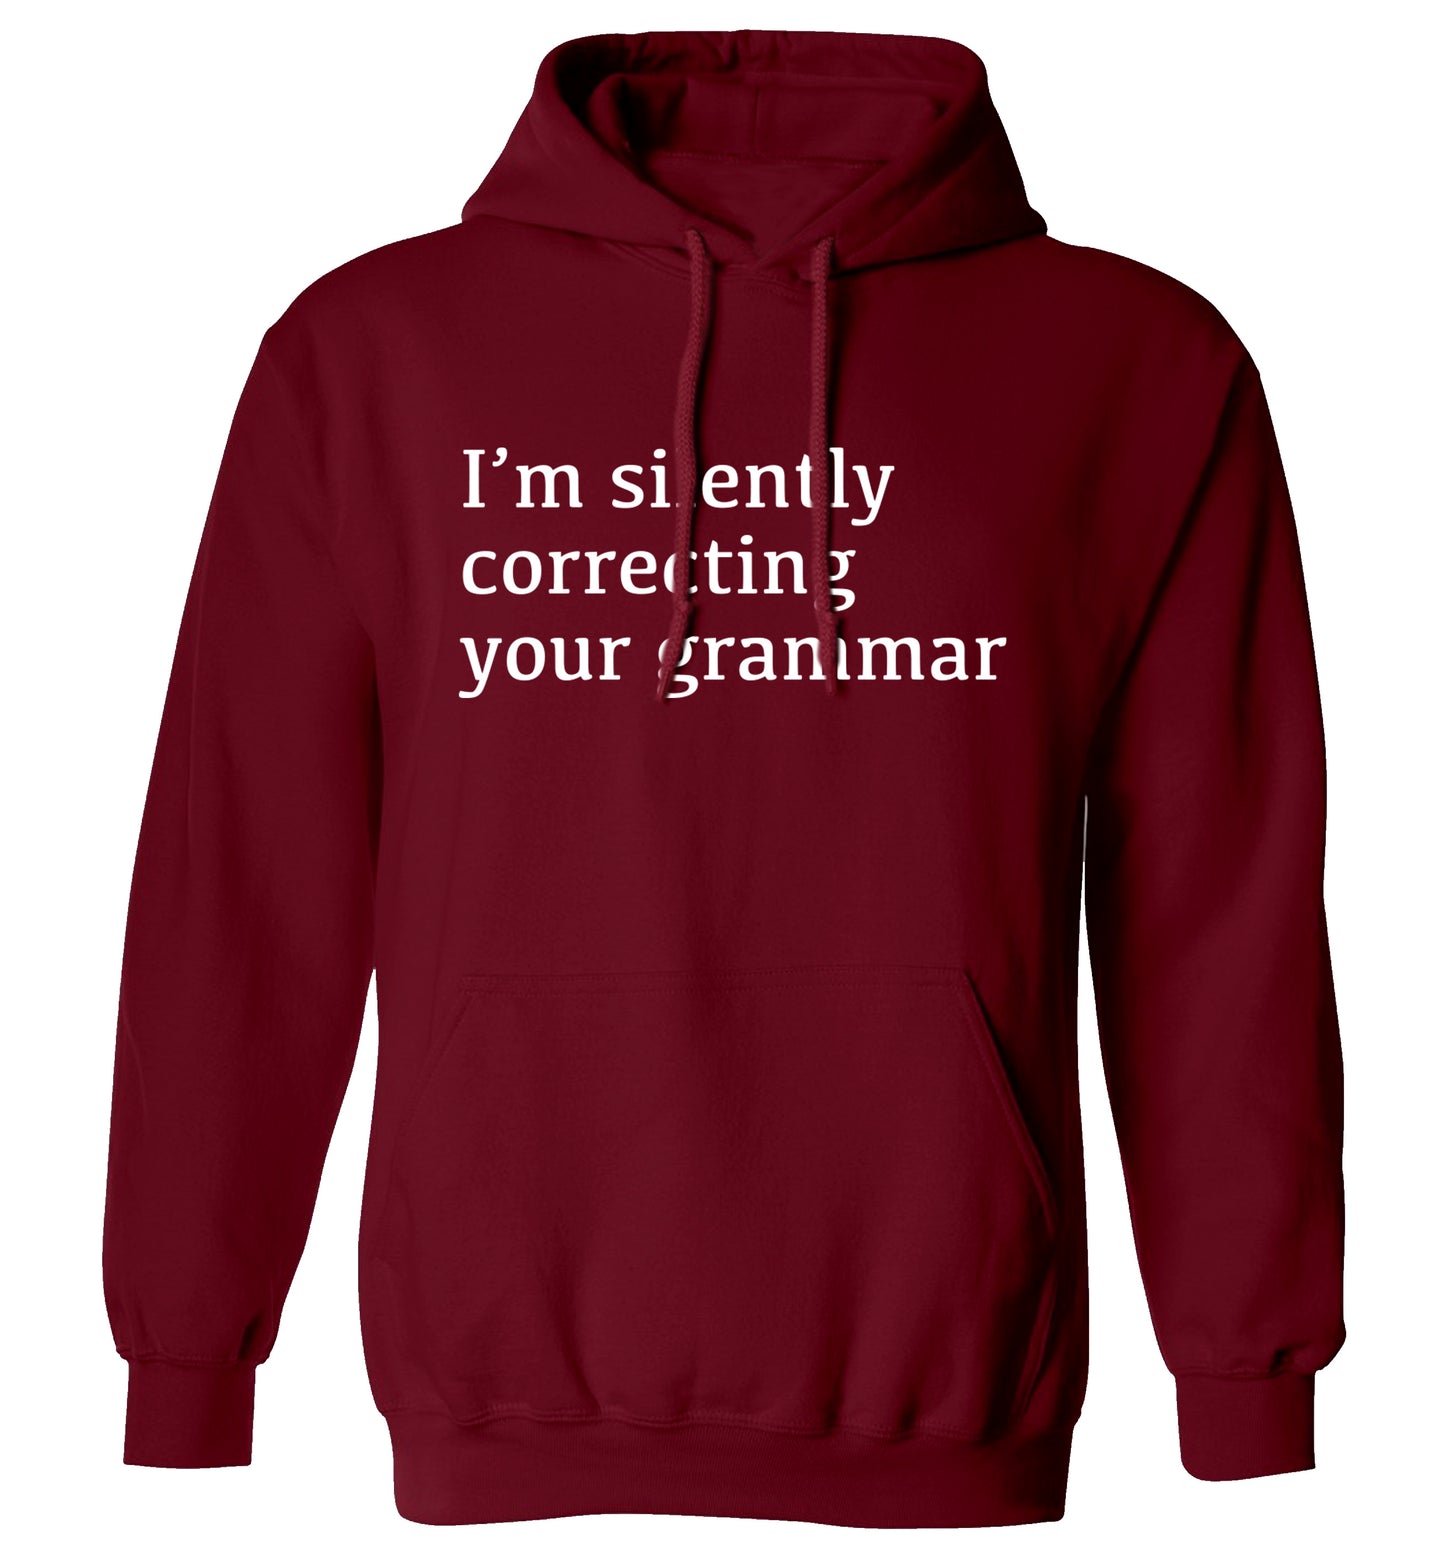 I'm silently correcting your grammar  adults unisex maroon hoodie 2XL